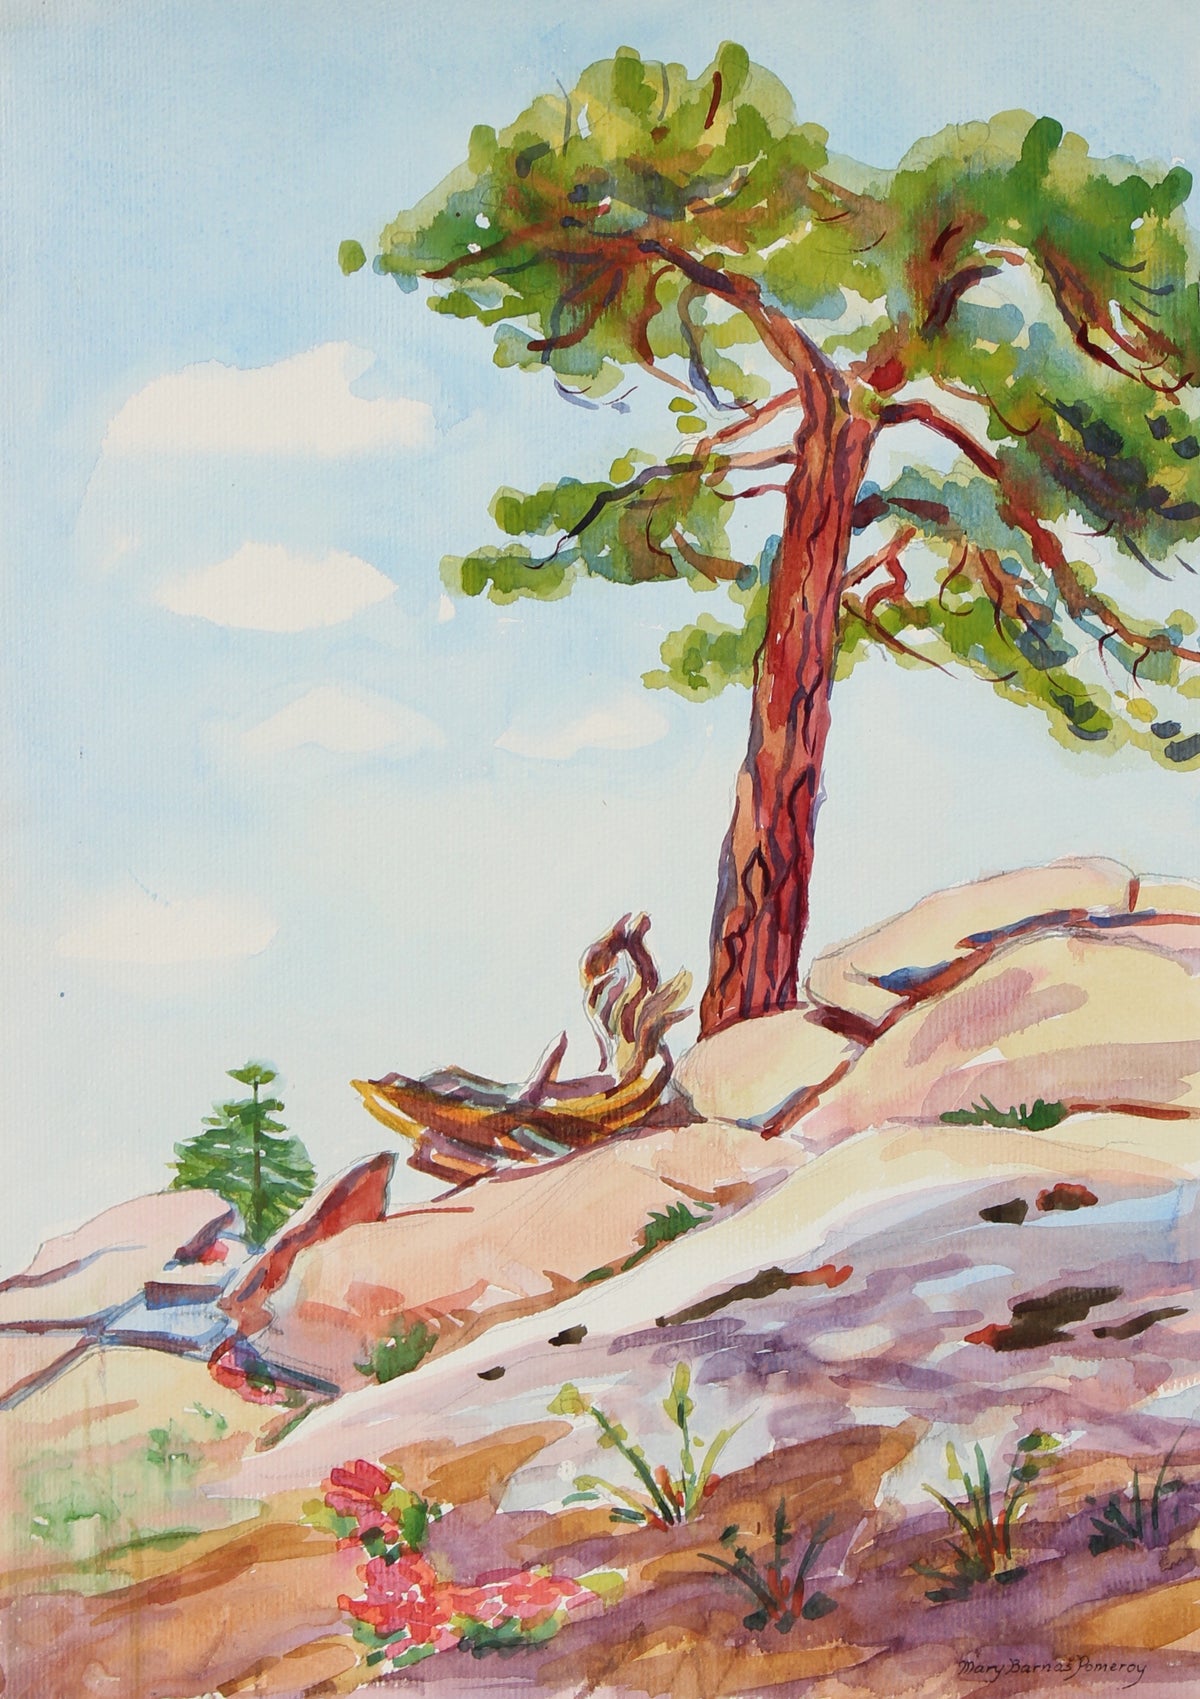 Tree Emerging From Rocks &lt;br&gt; Mid 20th Century Watercolor&lt;br&gt;&lt;br&gt;#93553